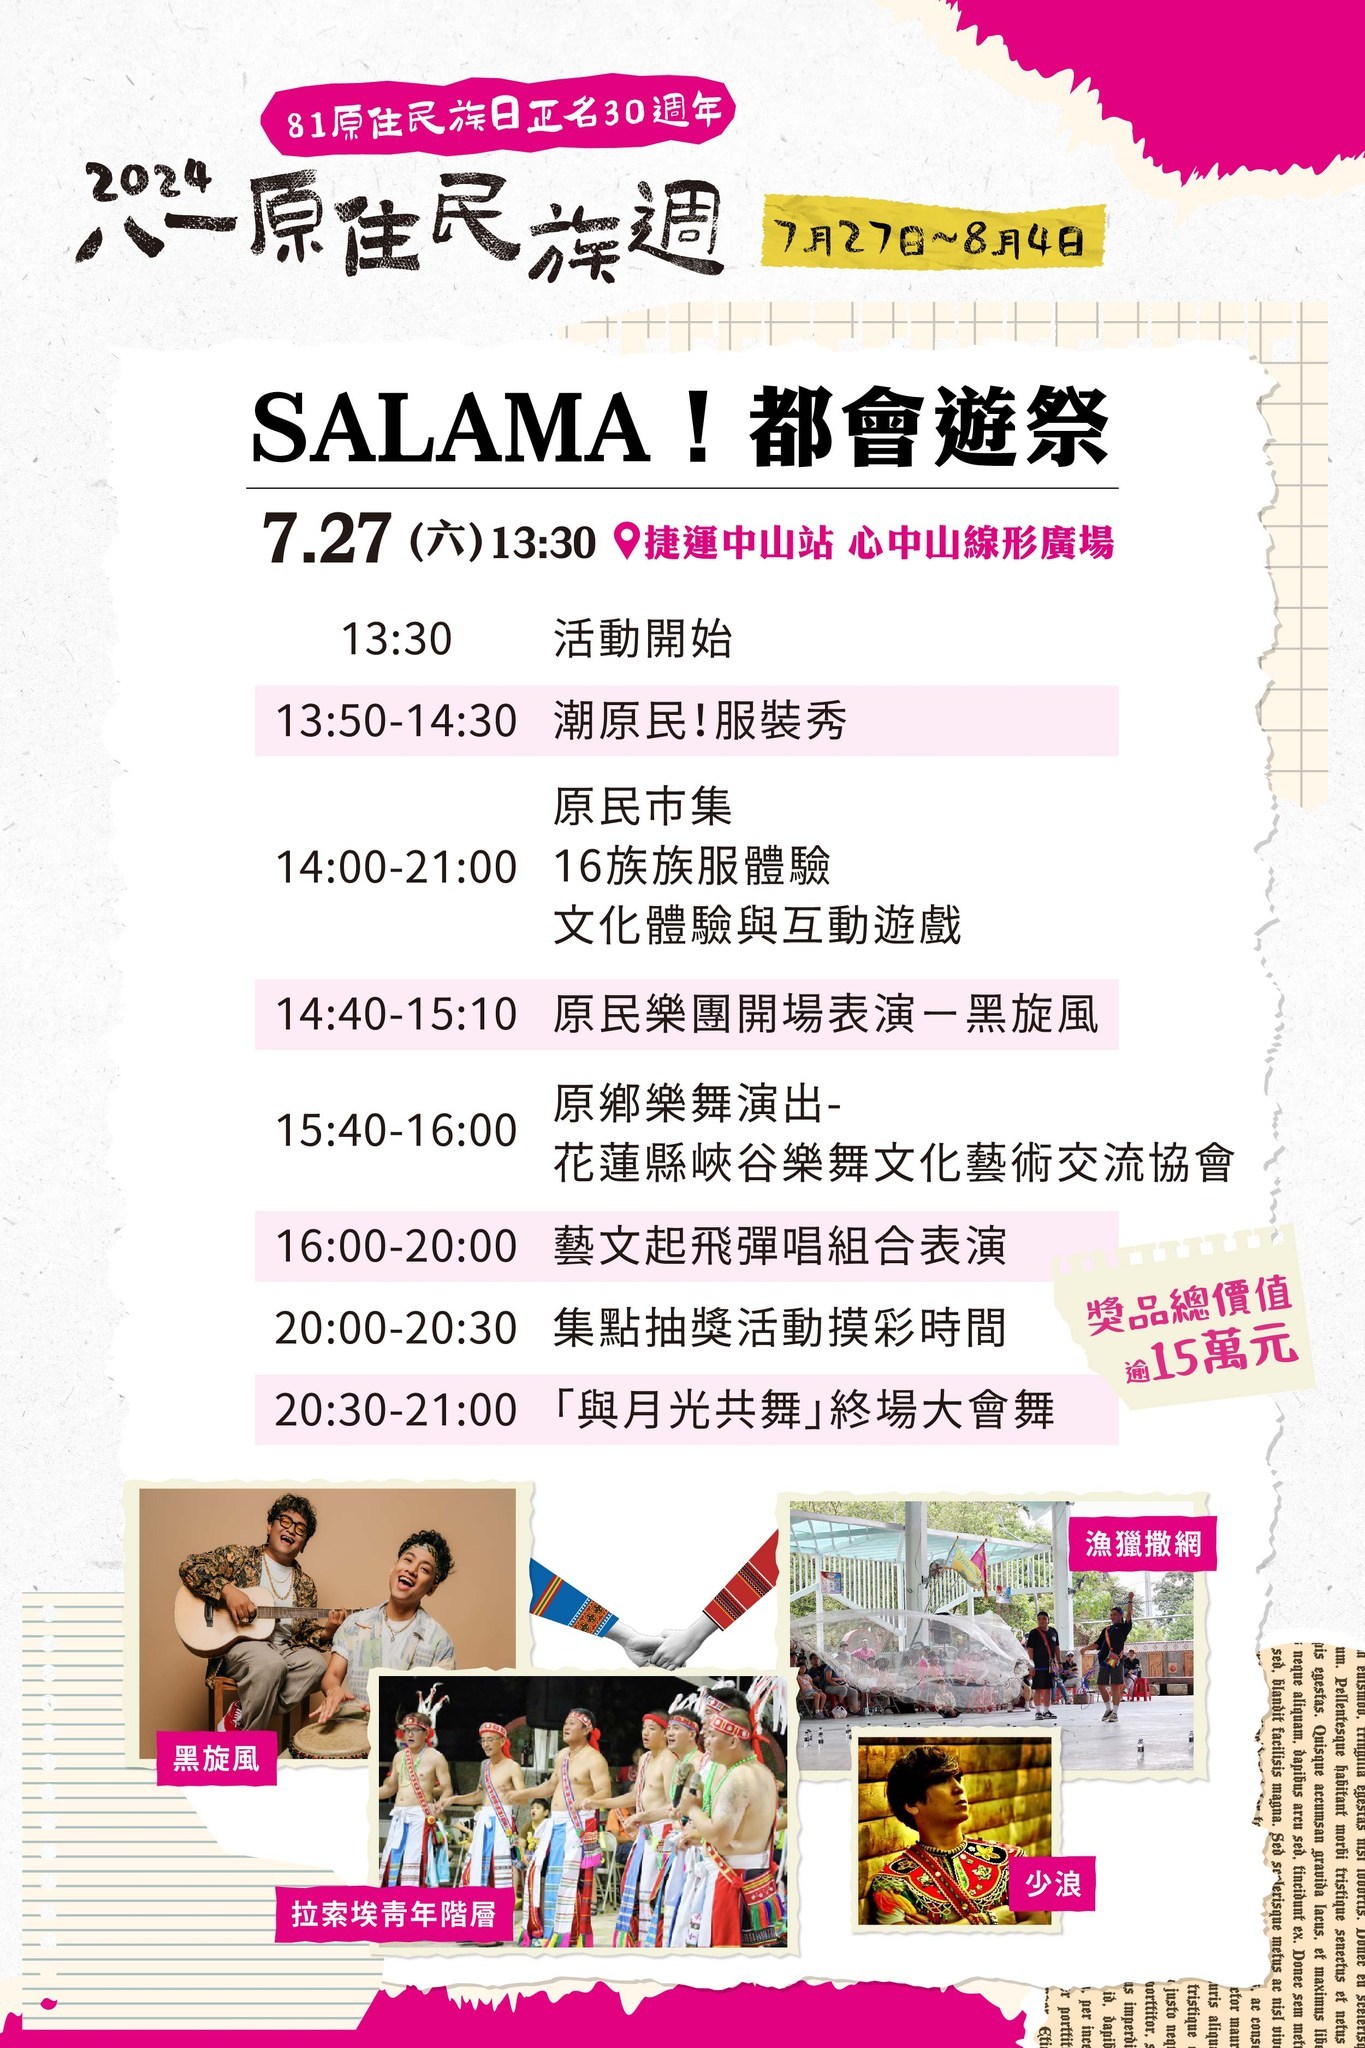 「SALAMA！都會遊祭」活動7/27、7/28在捷運中山站旁的心中山線形公園登場